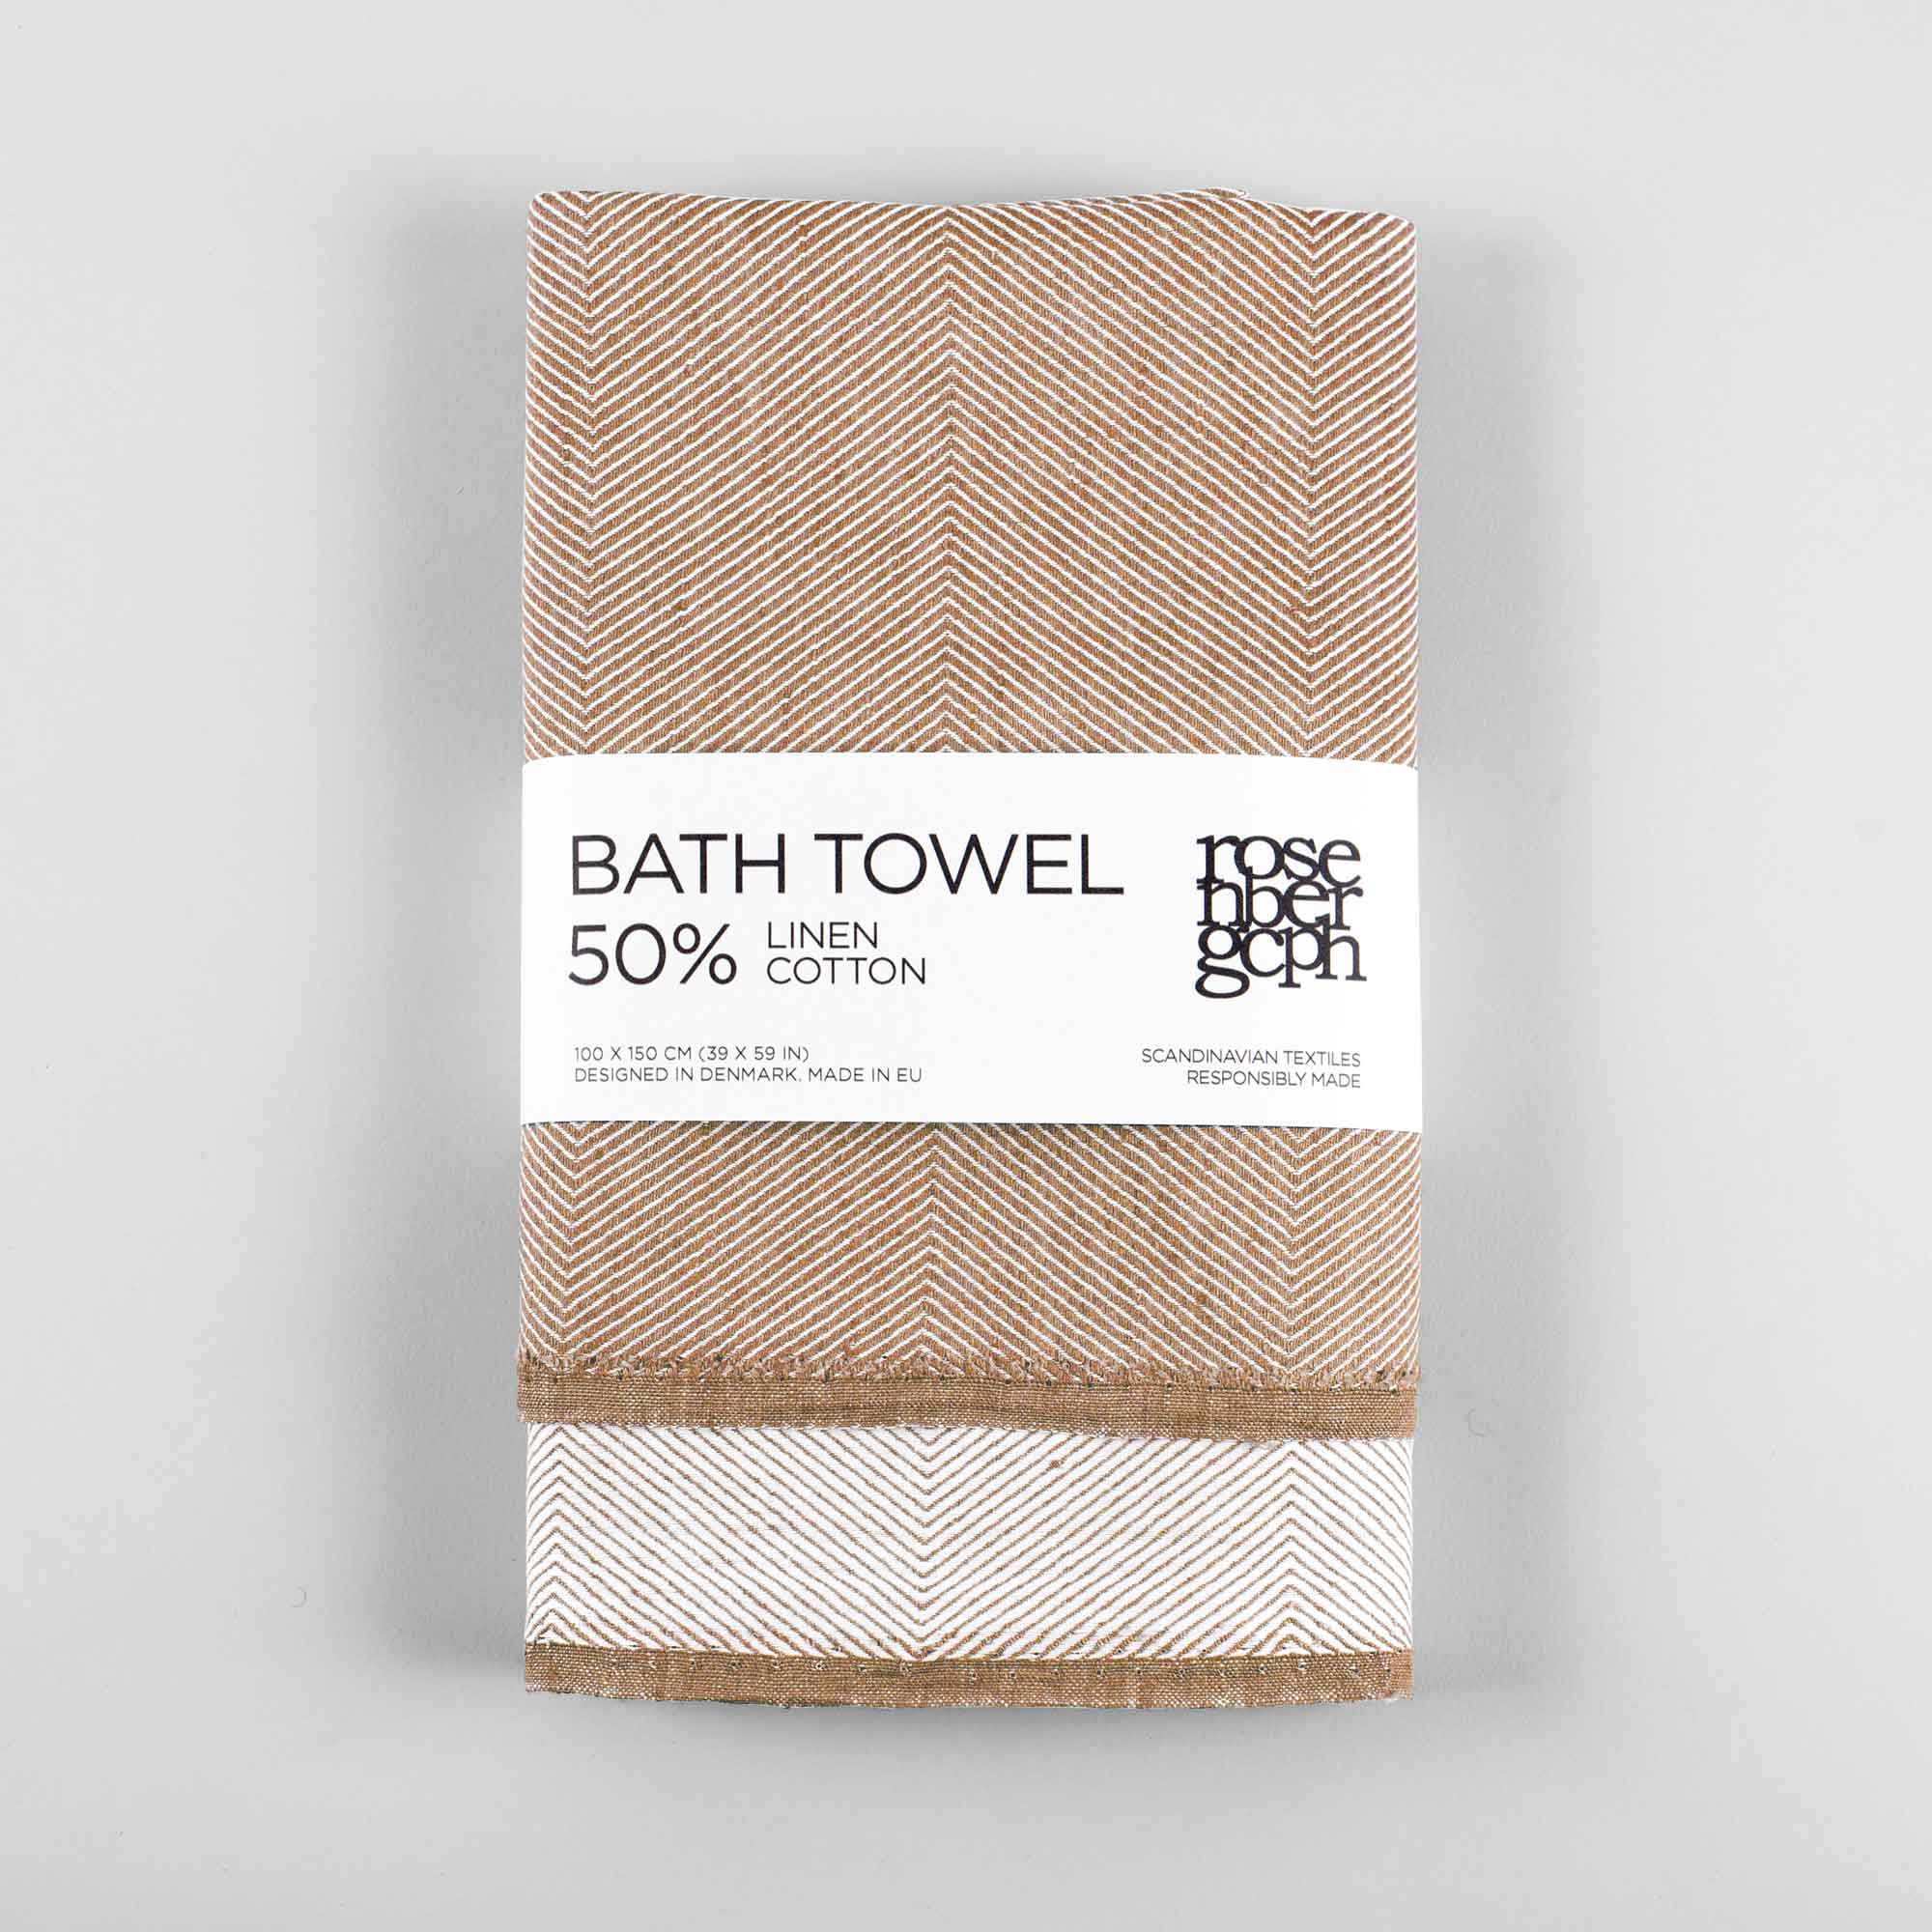 Bath towel, Almond, linen/cotton, design by Anne Rosenberg, RosenbergCph